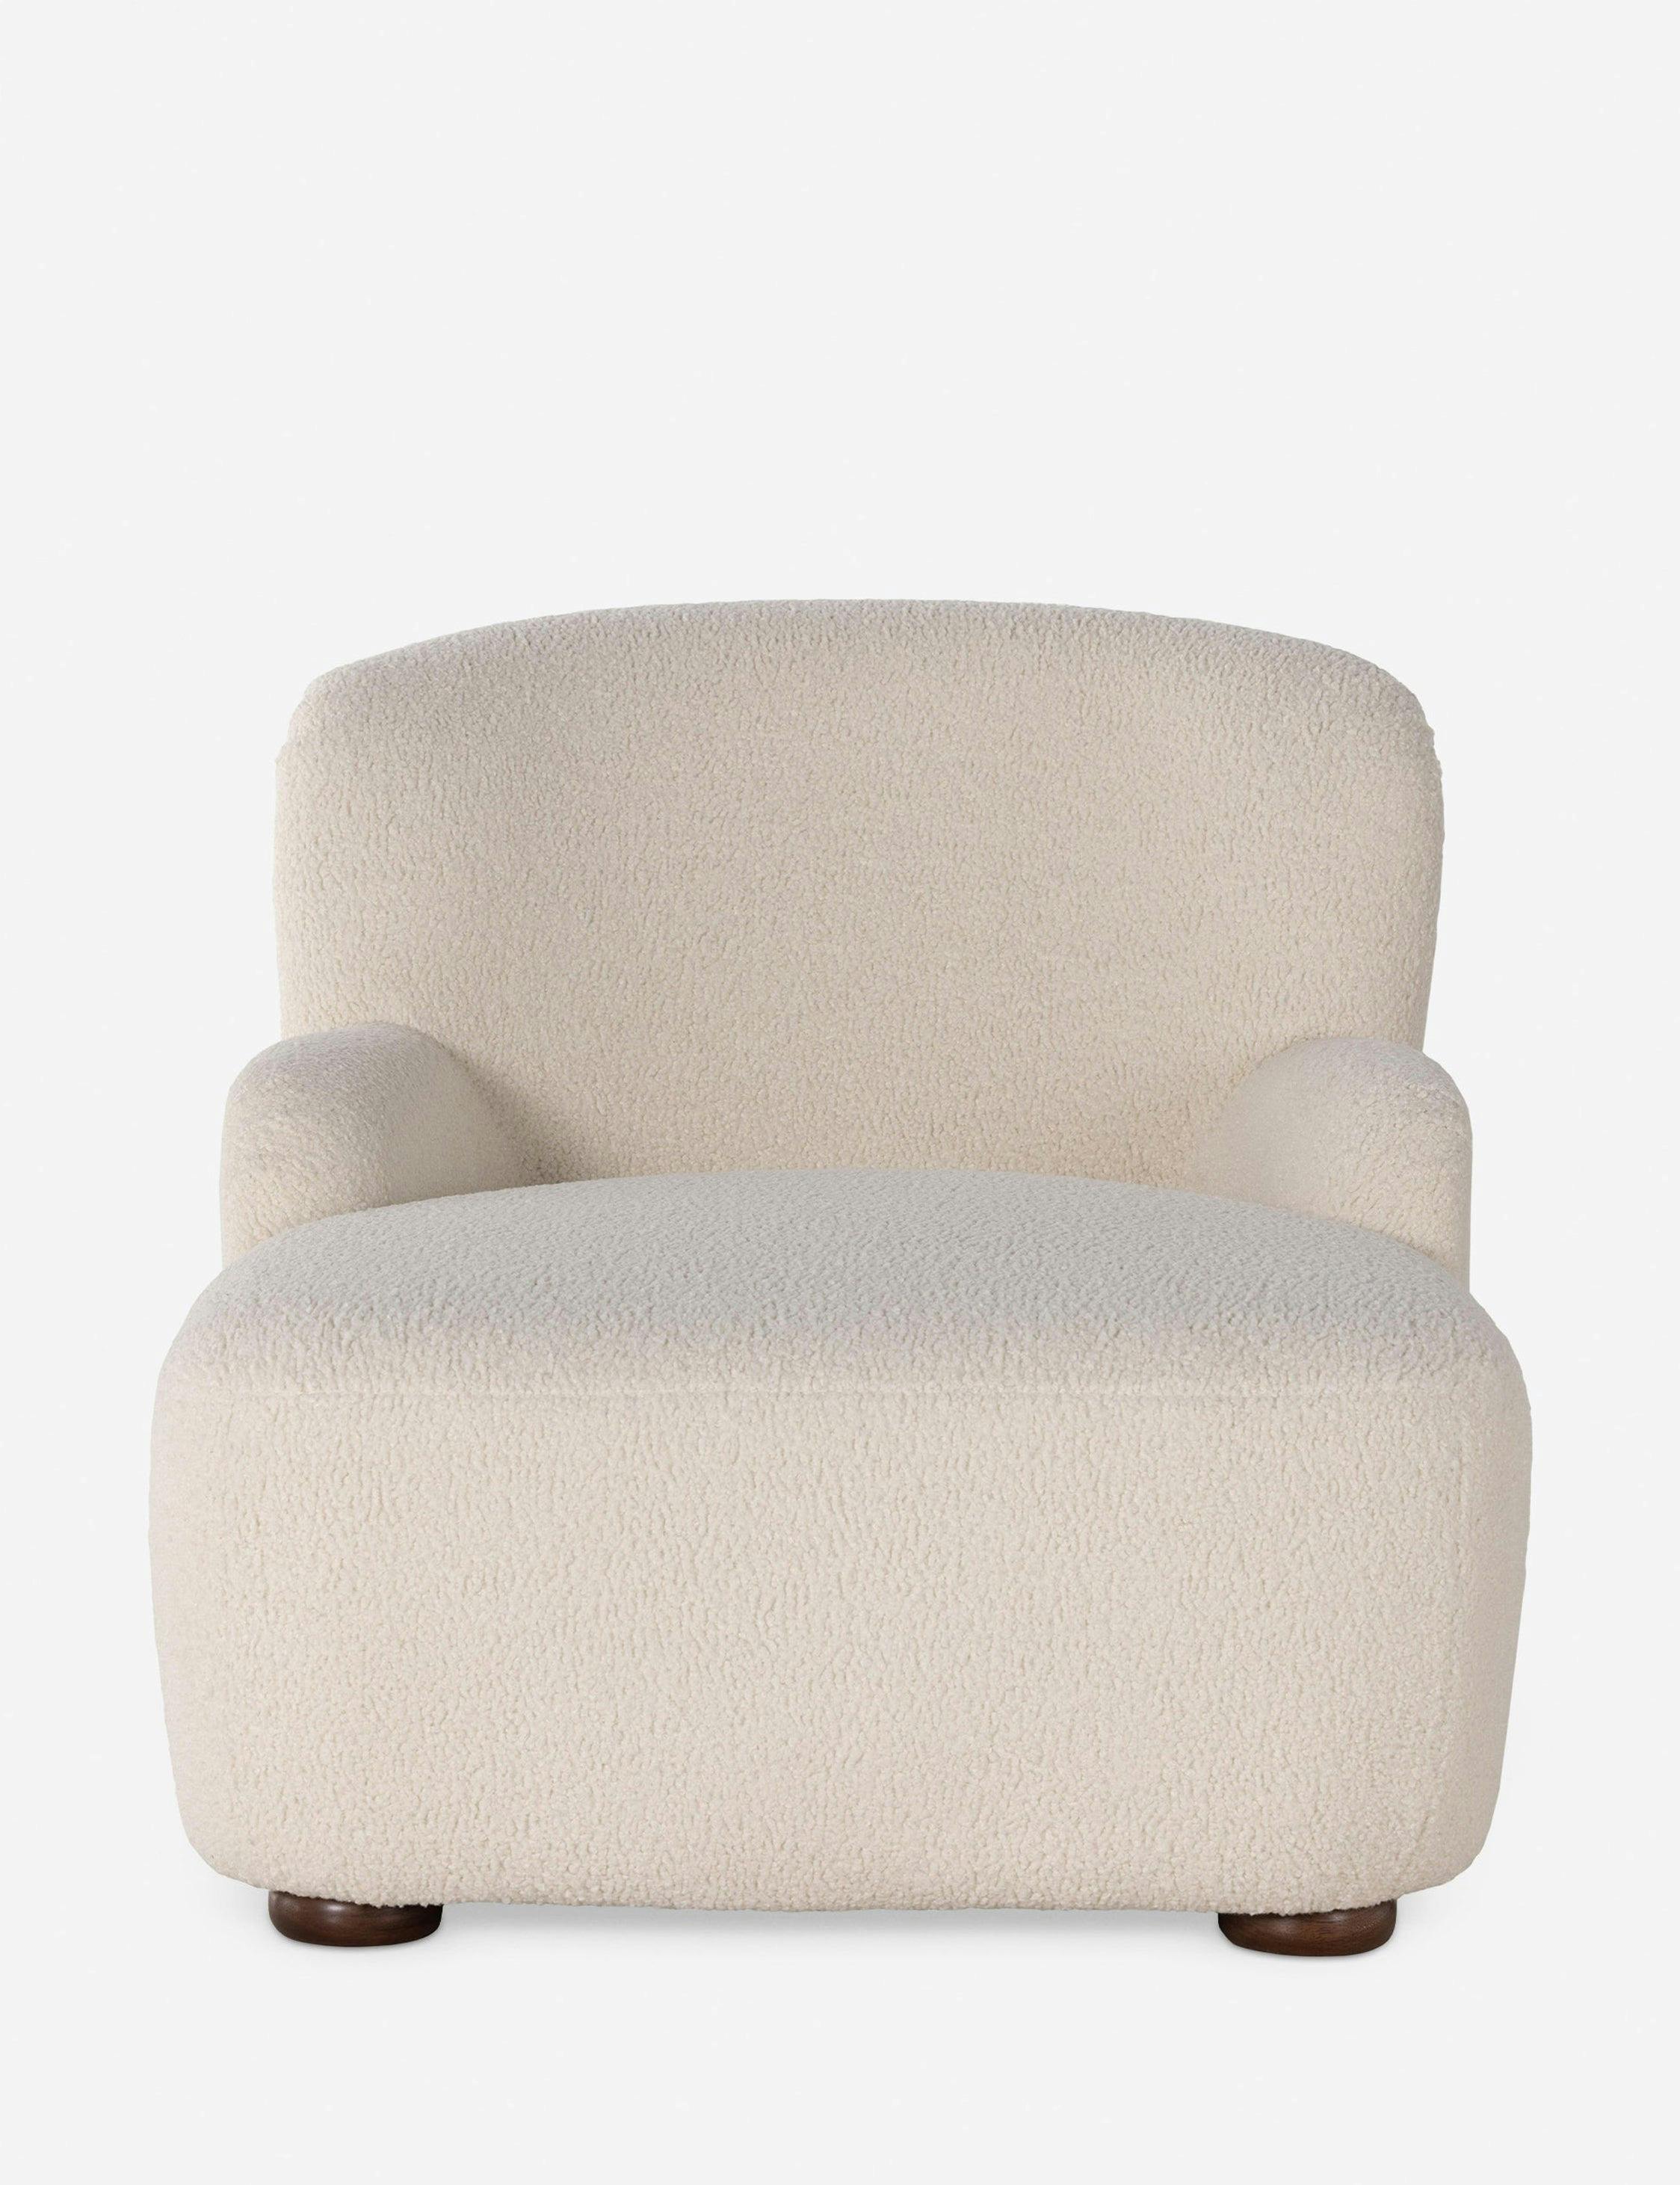 Preston Natural Sheepskin Upholstered Chaise Lounge